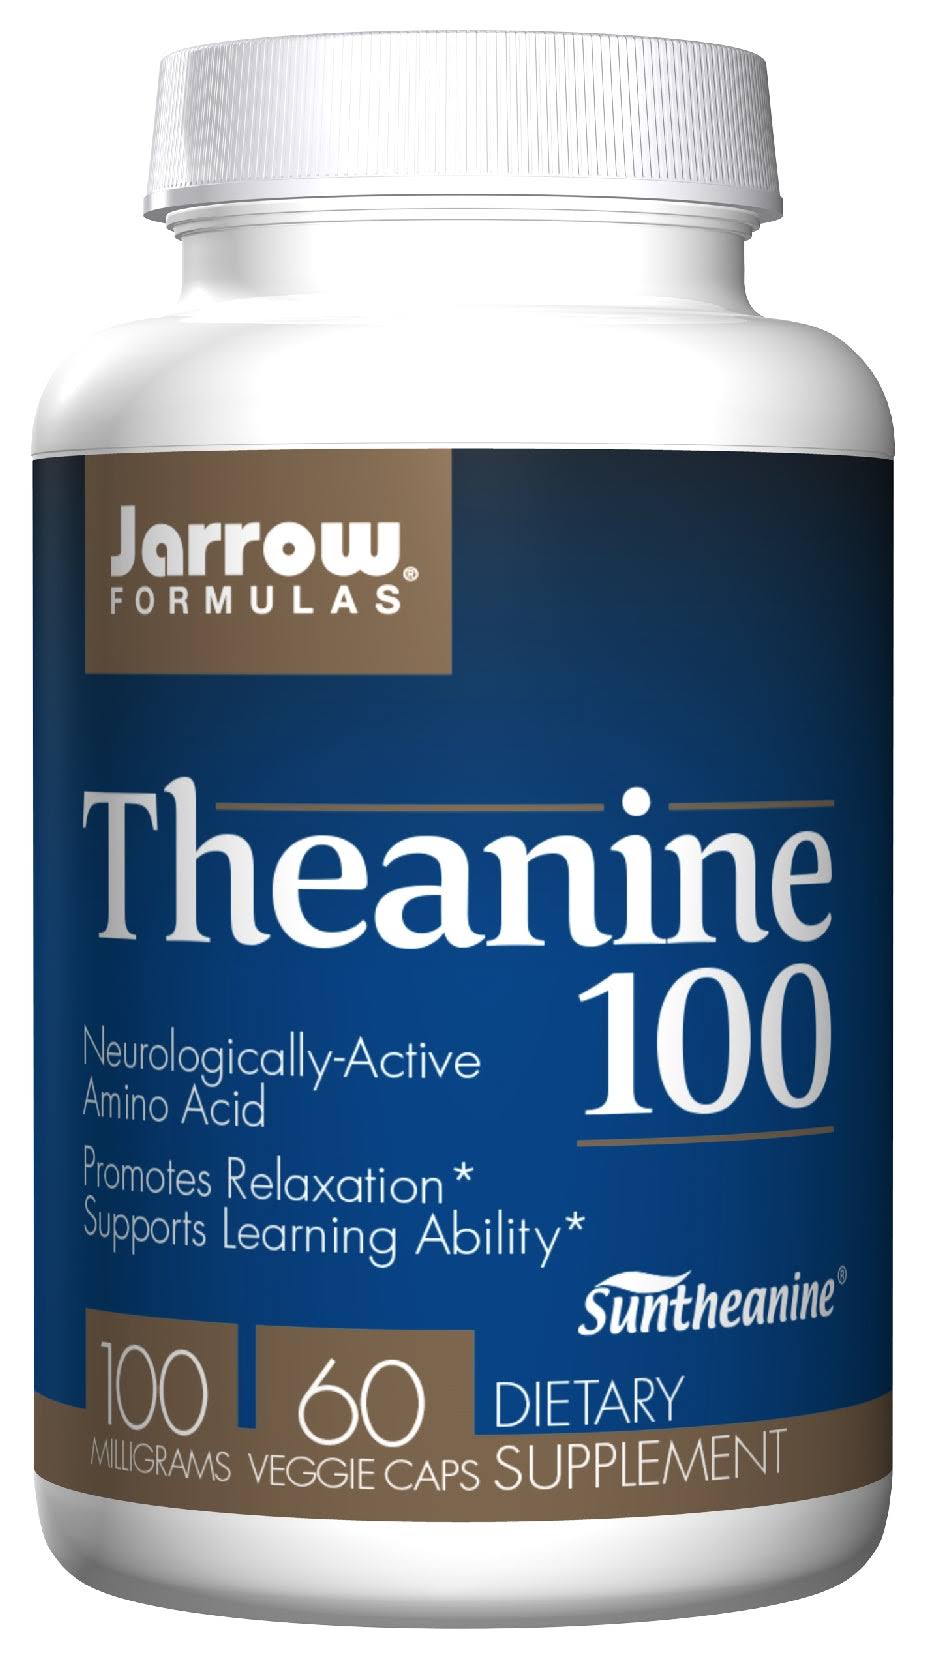 Jarrow Formulas Theanine 100mg Supplement - 60 Capsules